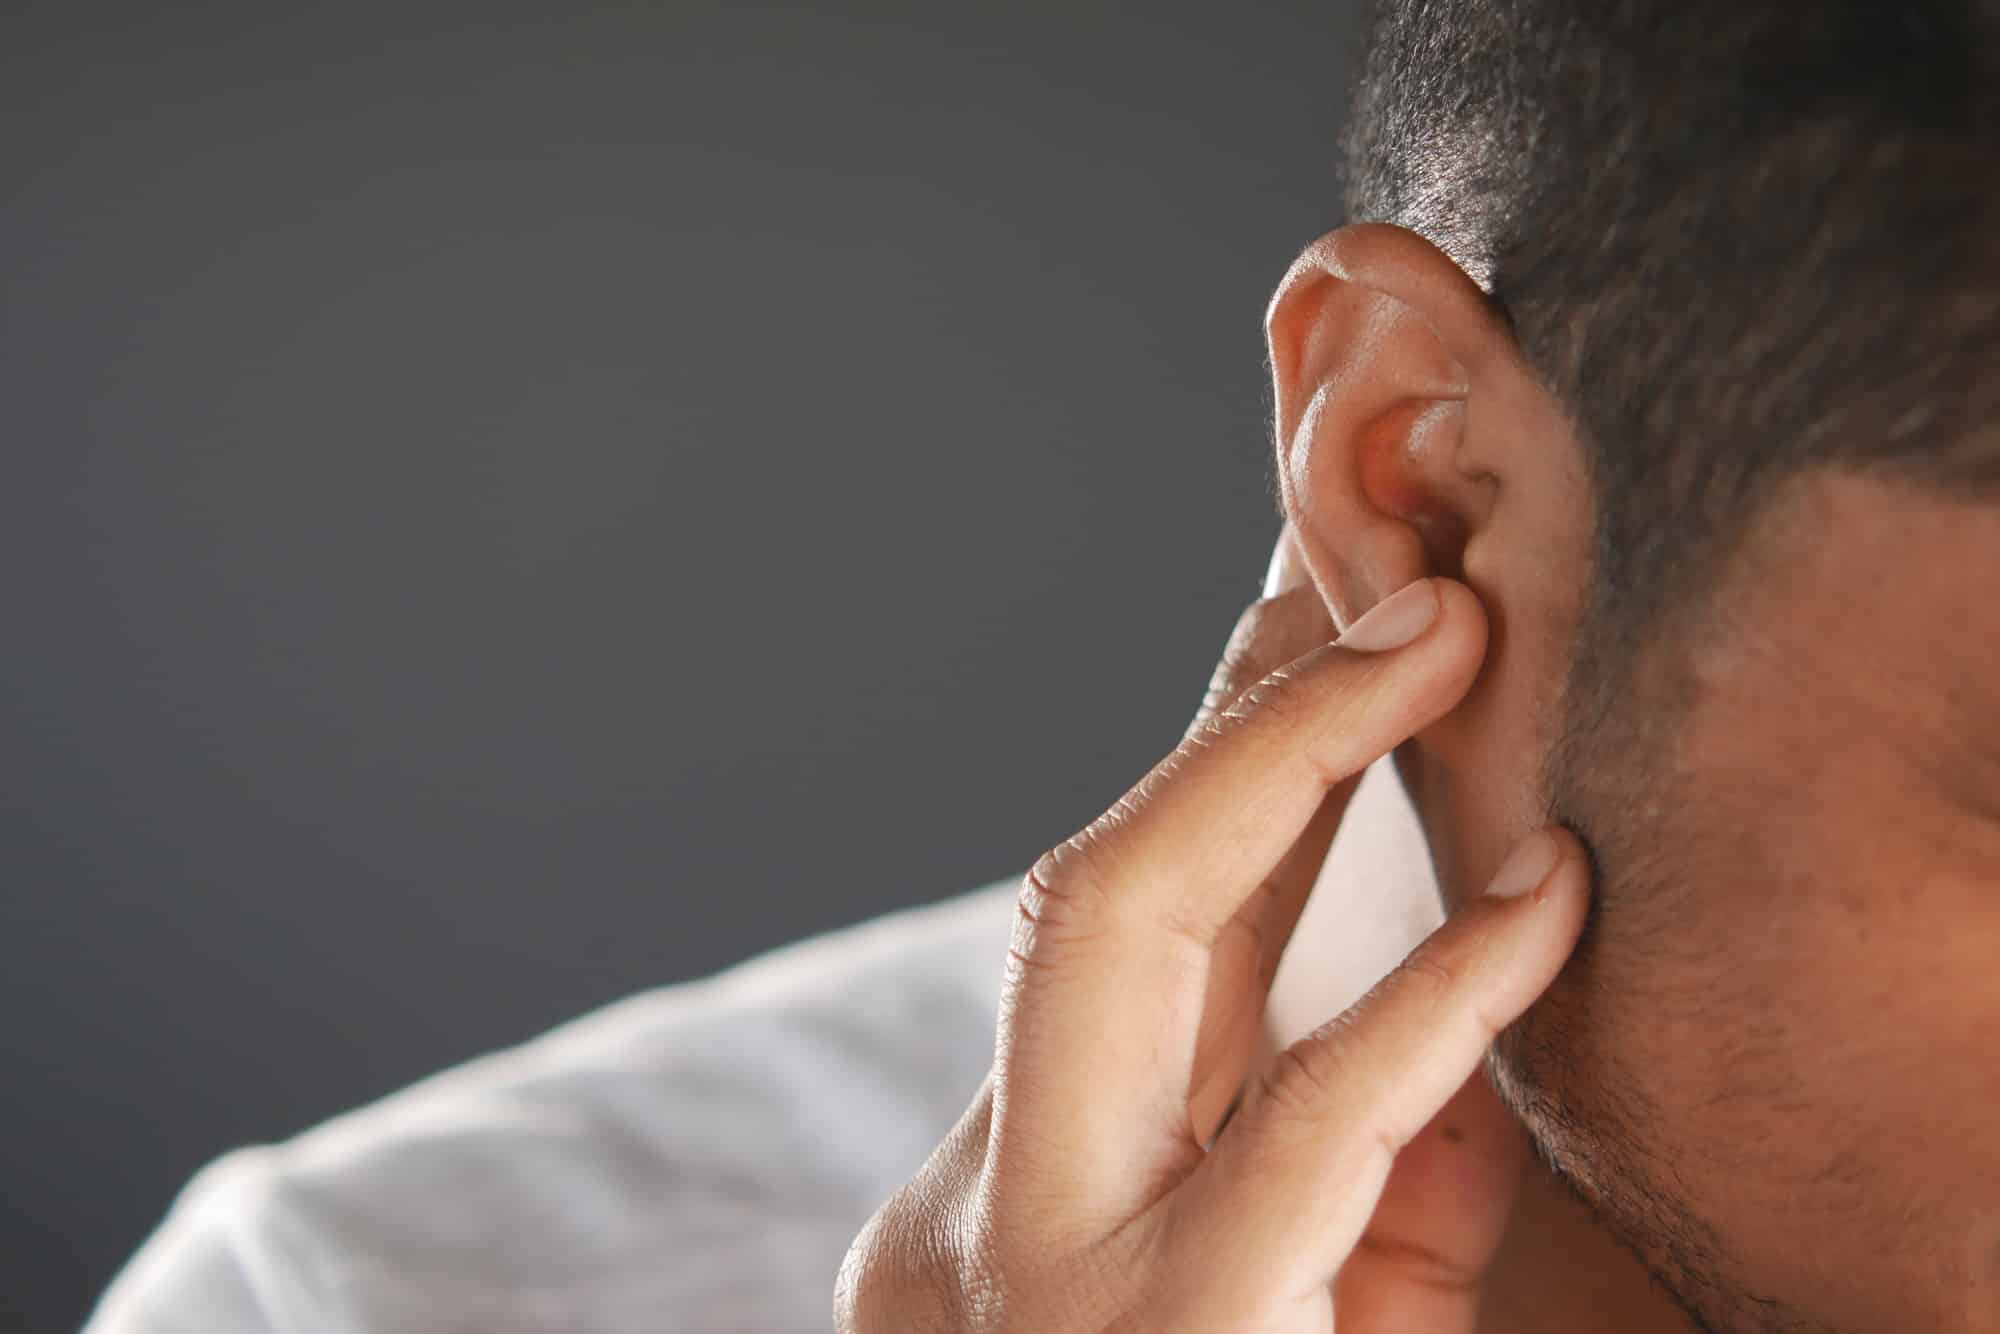 young man having ear pain touching his painful ear ,